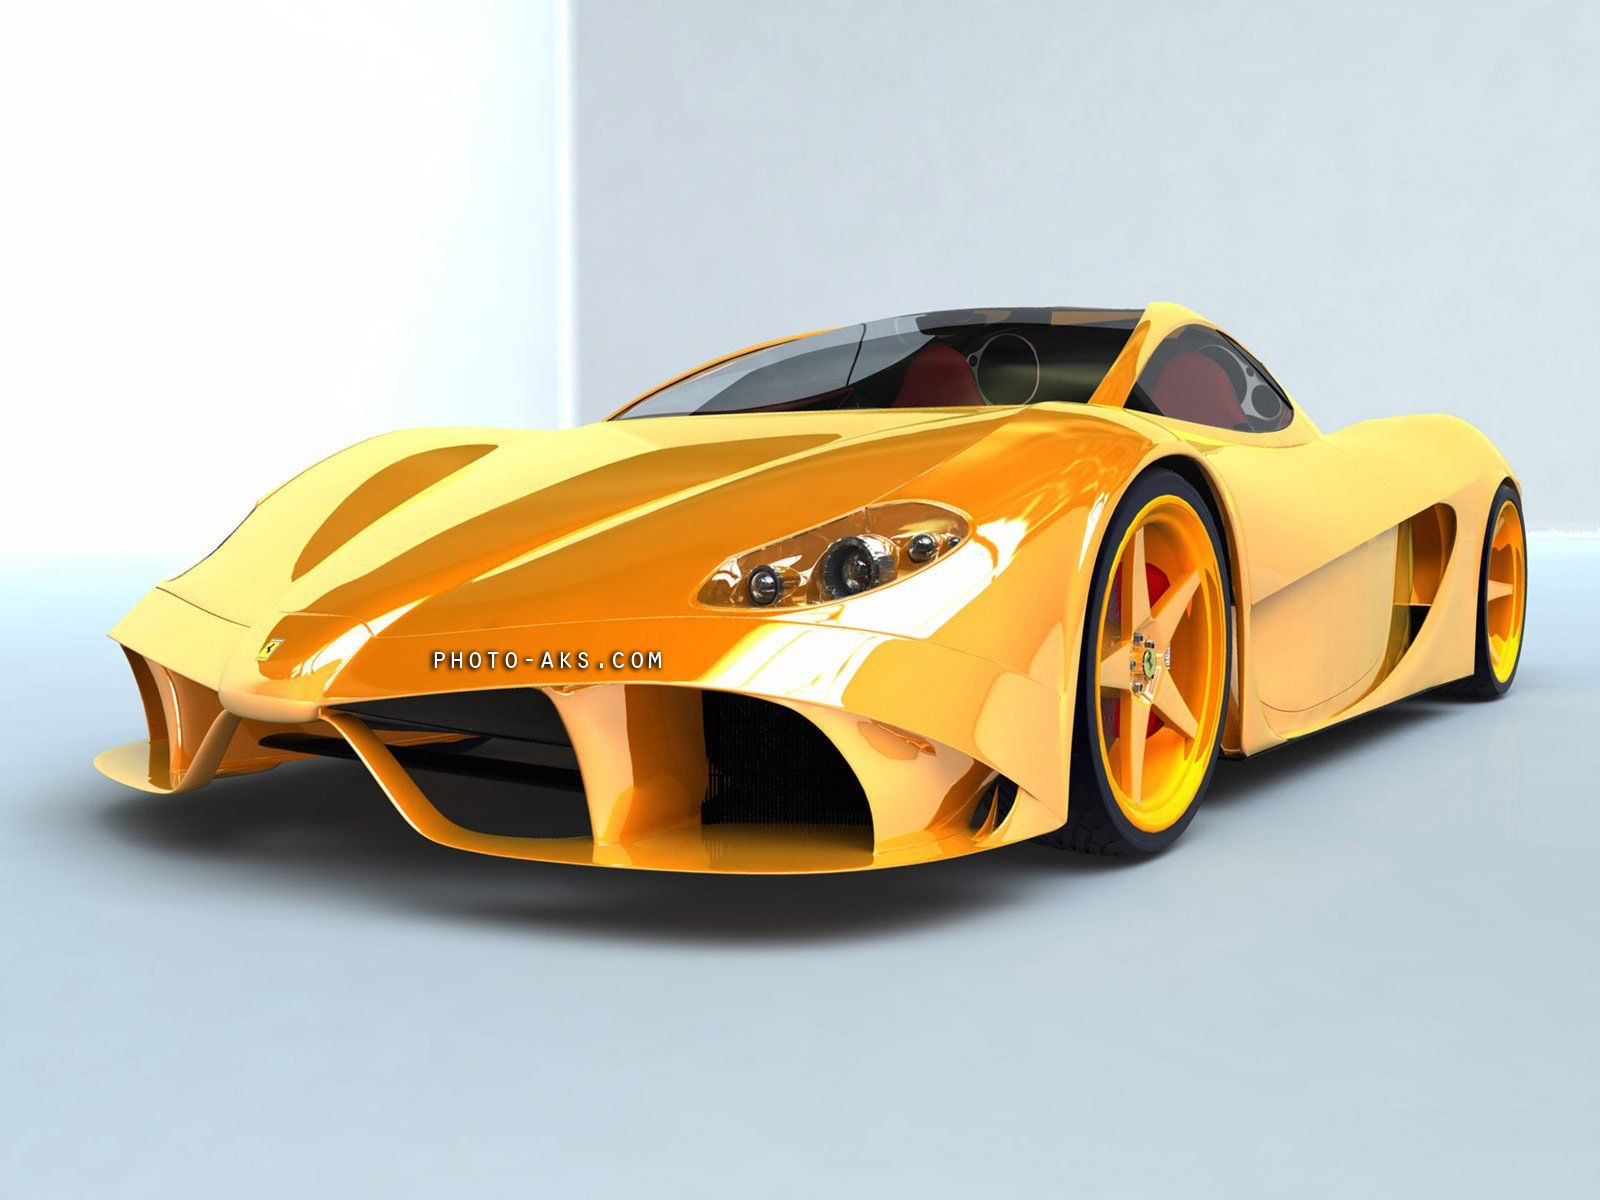 http://pic.photo-aks.com/photo/vehicles/car/modern-car/large/yellow-modern-car.jpg